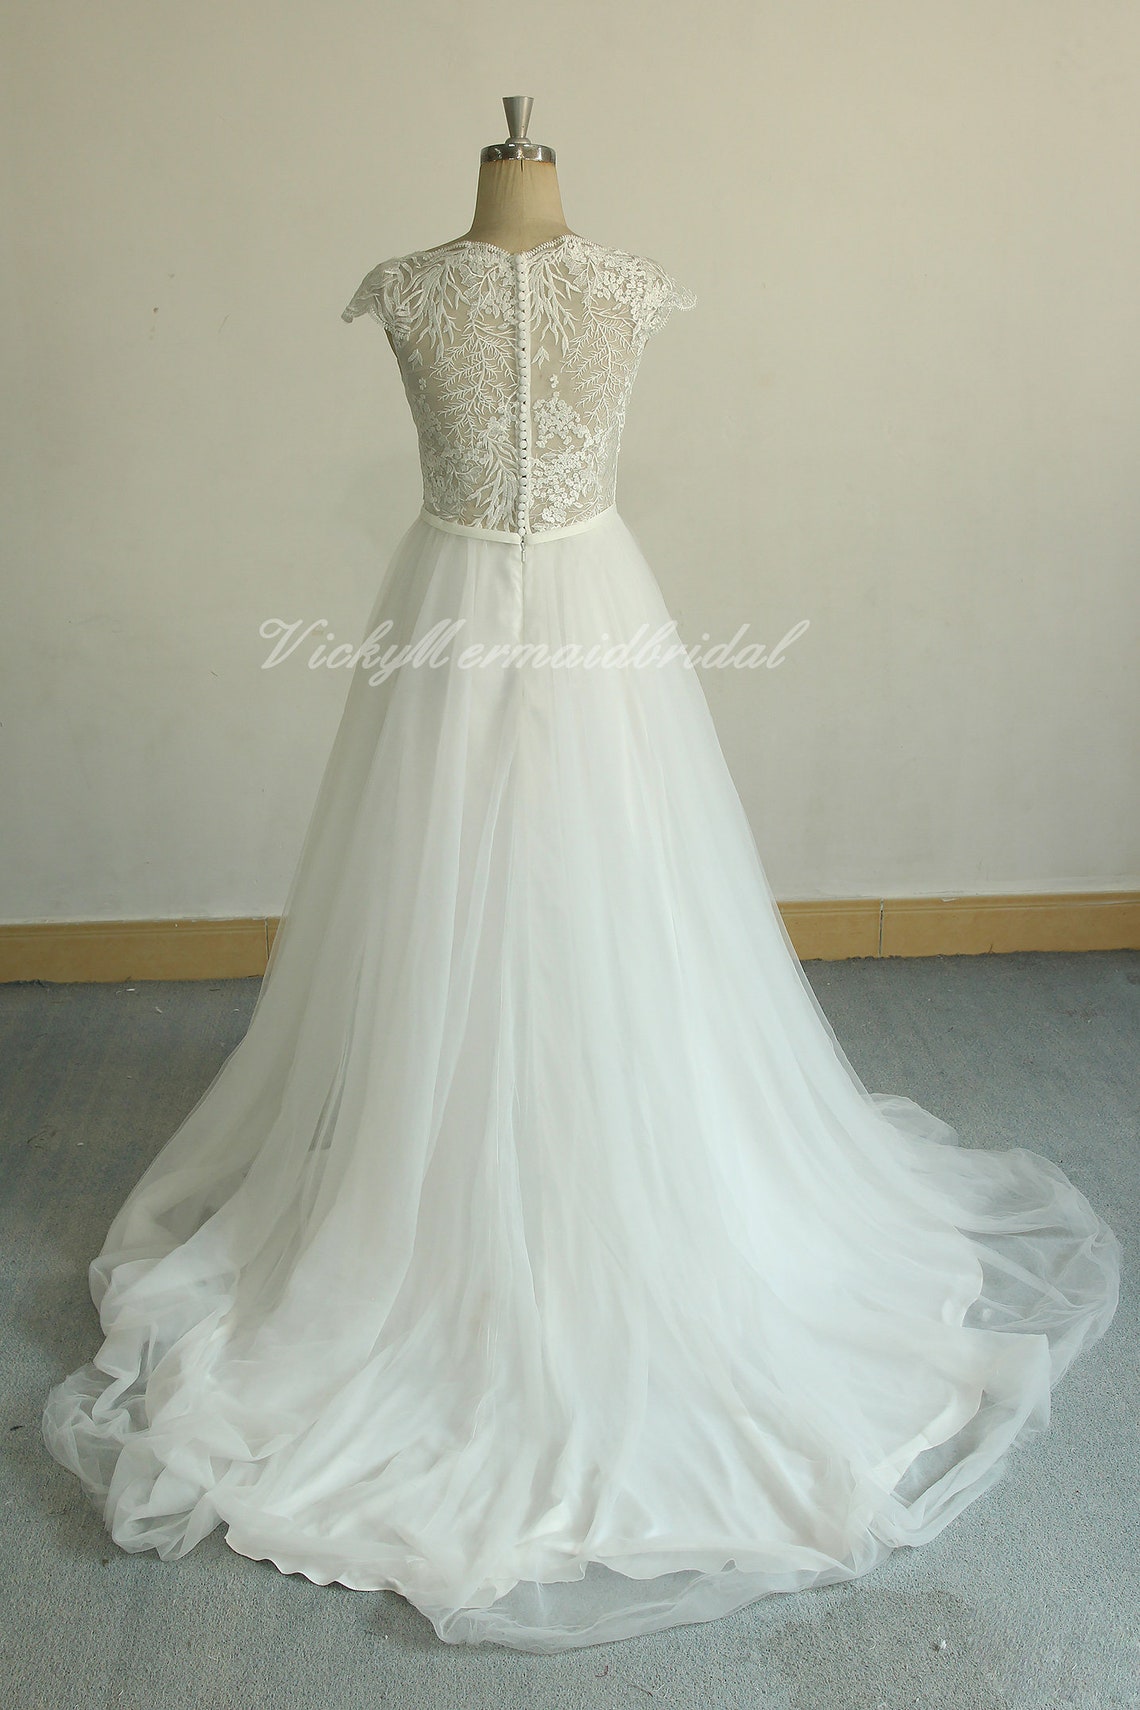 Romantic Ivory Bohemian Wedding DressScallop Neckline Outdoor | Etsy